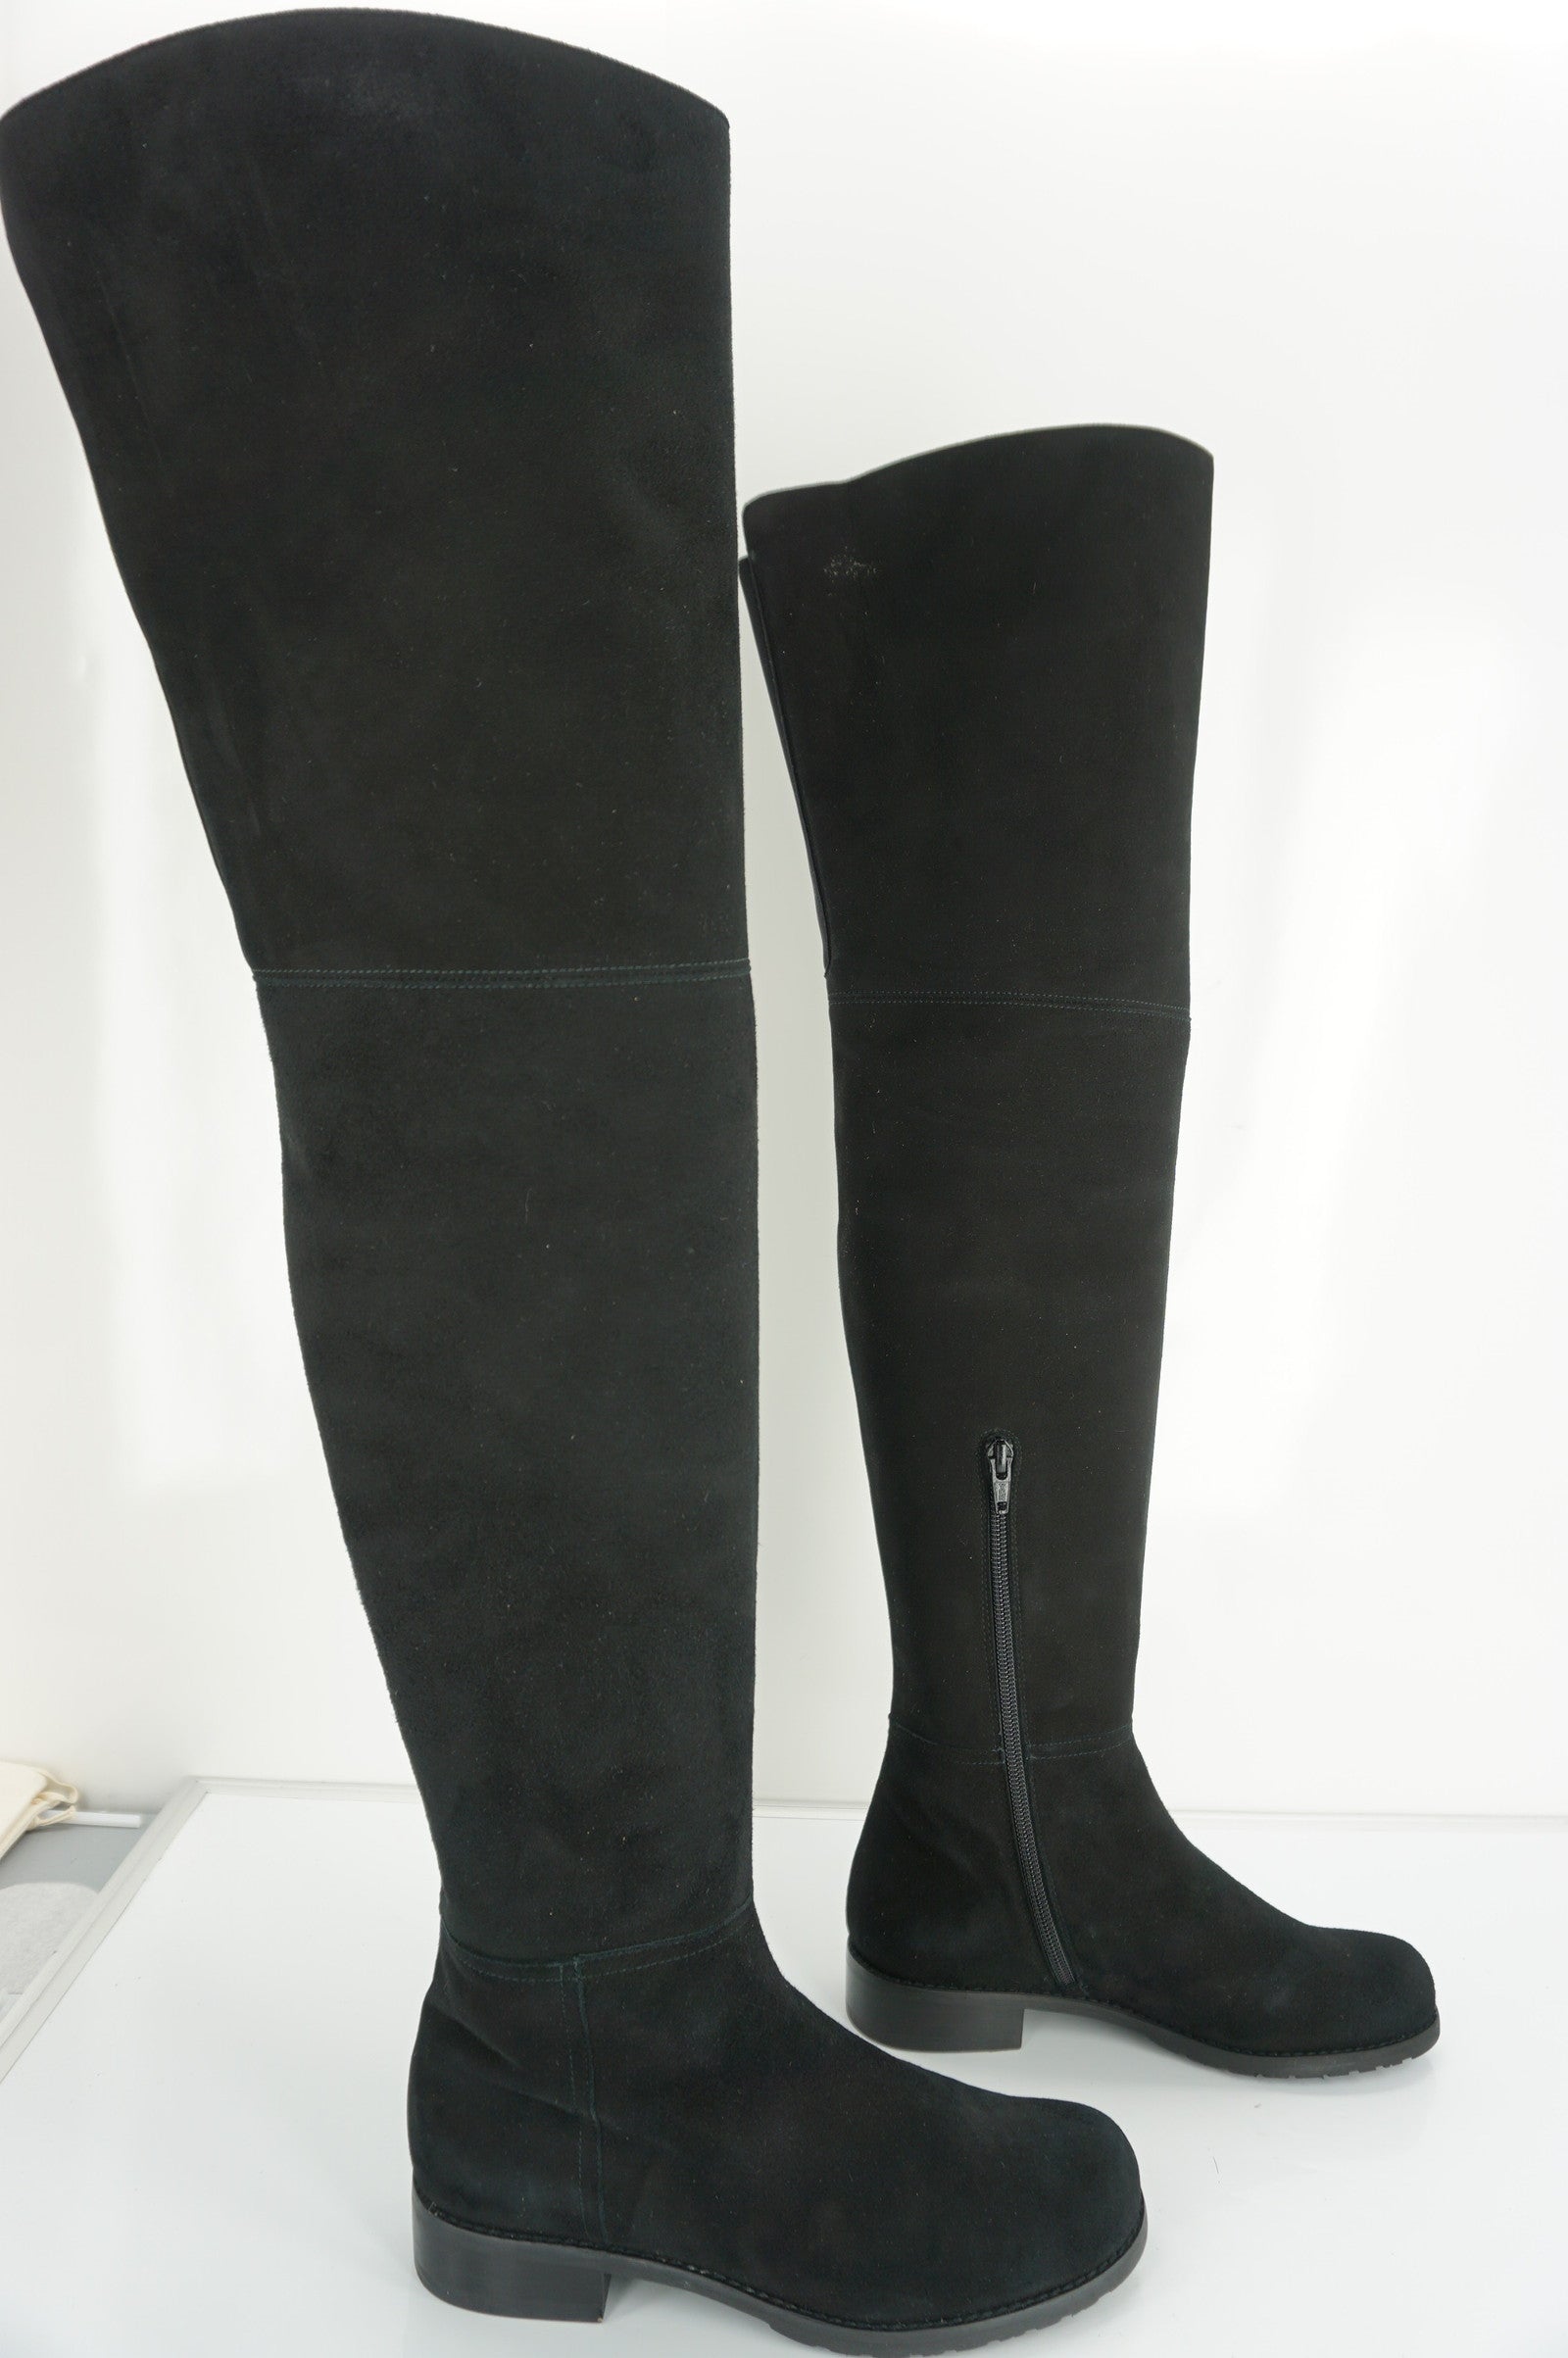 Stuart Weitzman Hilo Black Suede Over the Knee Boots Size 5 NIB $798